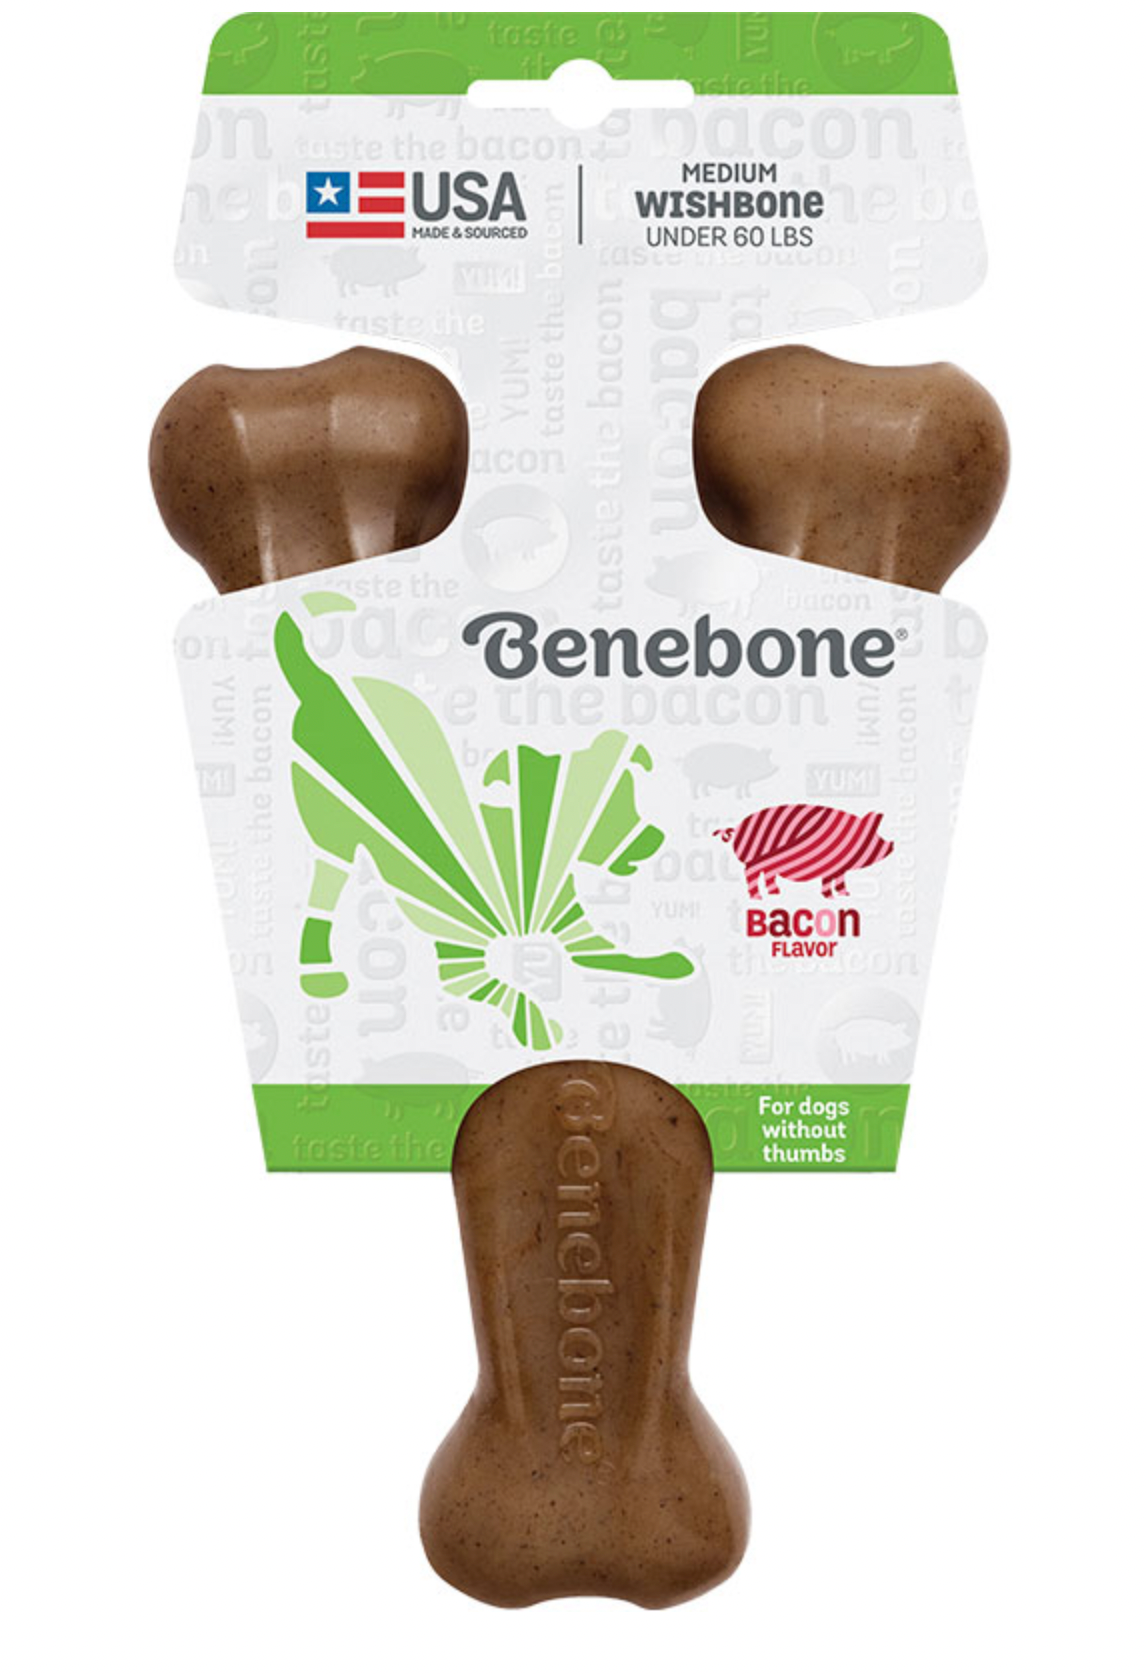 Benebone Wishbone Tough Dog Chew Toy - Bacon Flavor/Large